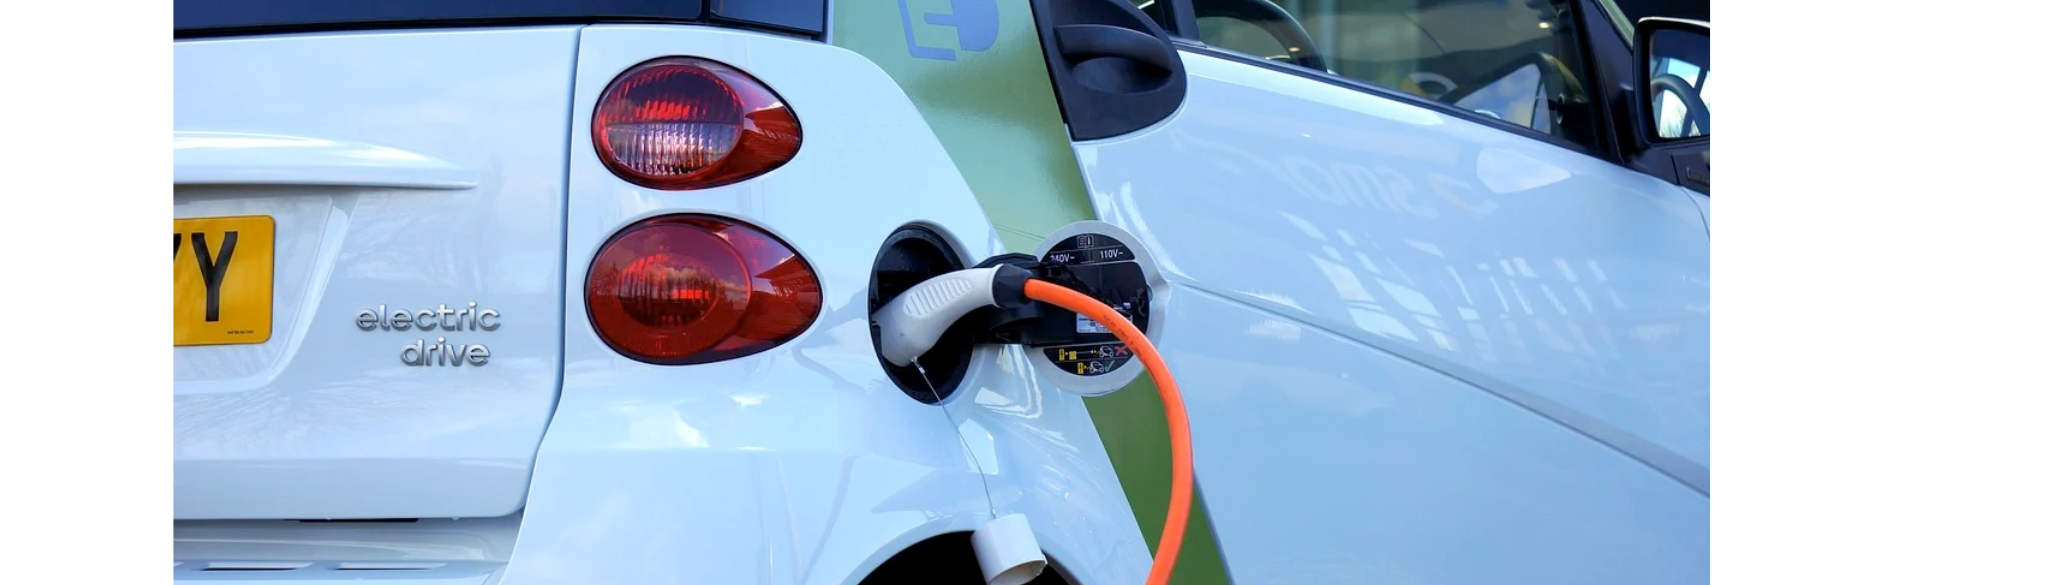 Smart car charging